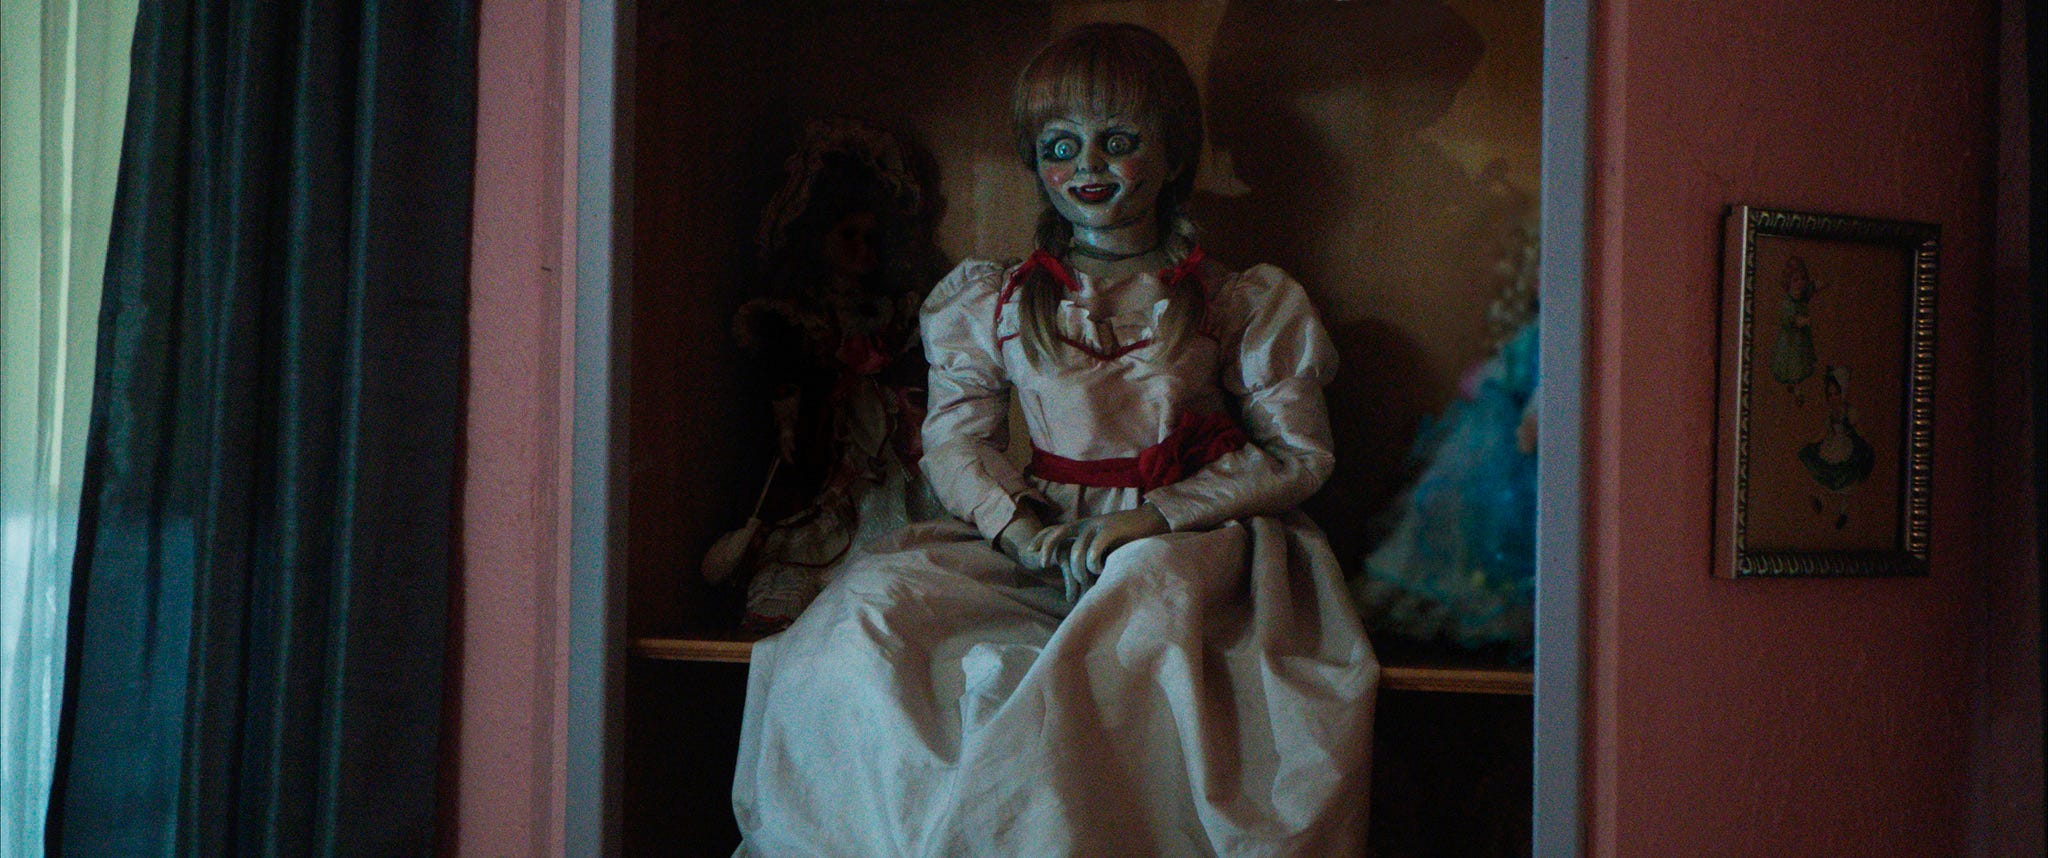 ghost annabelle doll